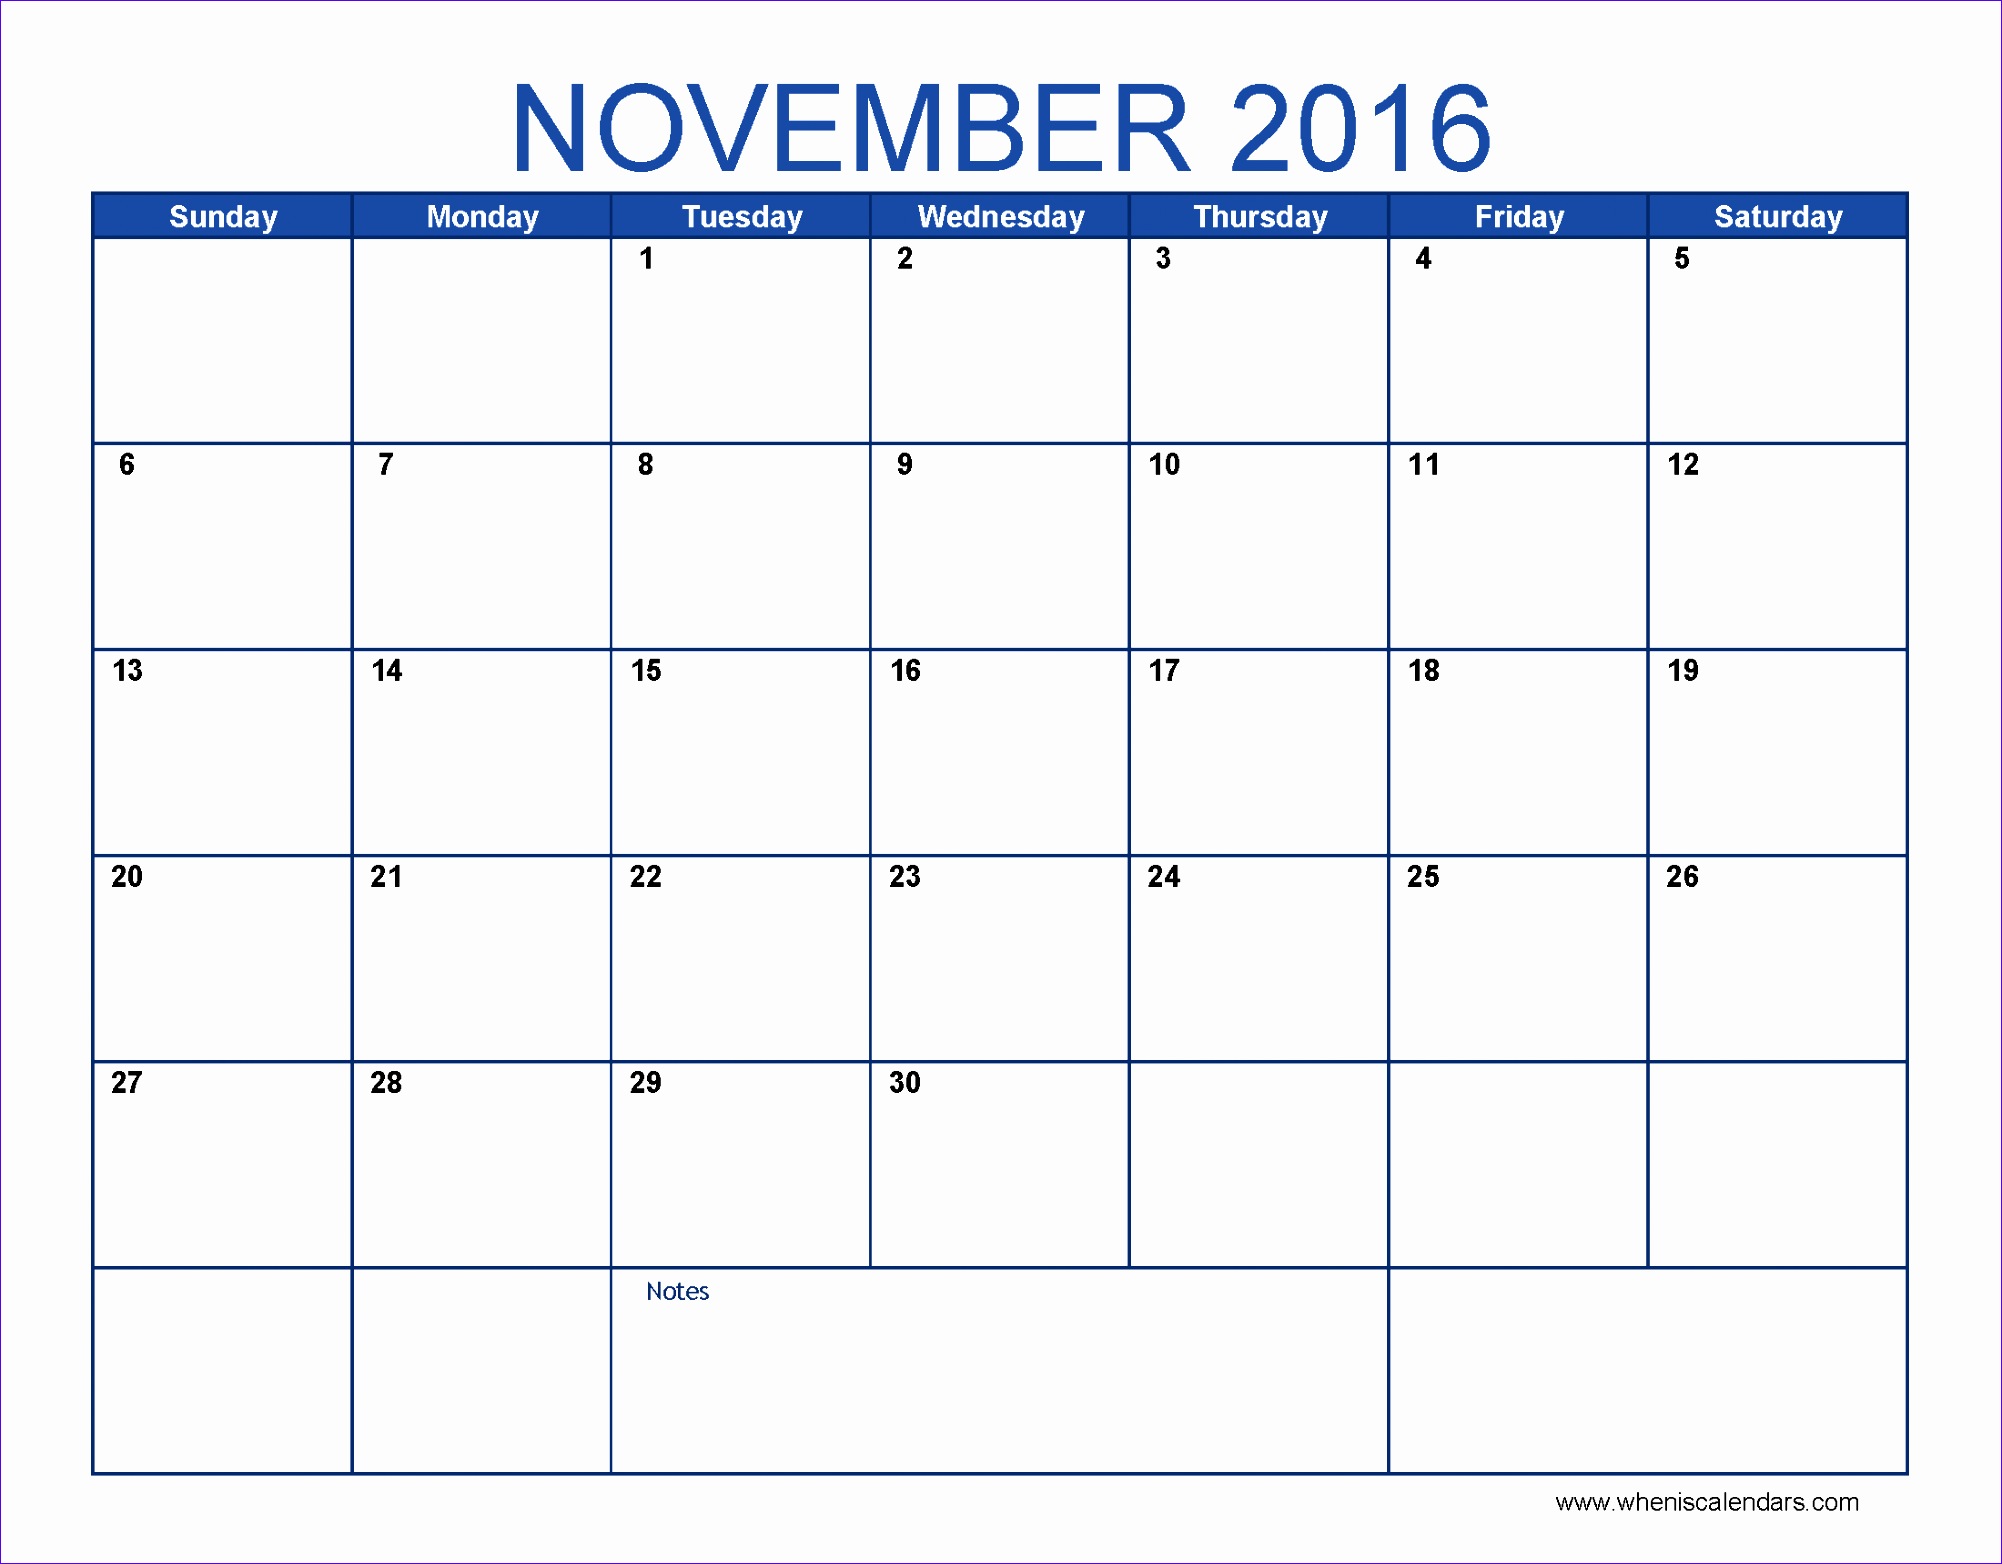 november 2016 calendar excel 2407 20021564